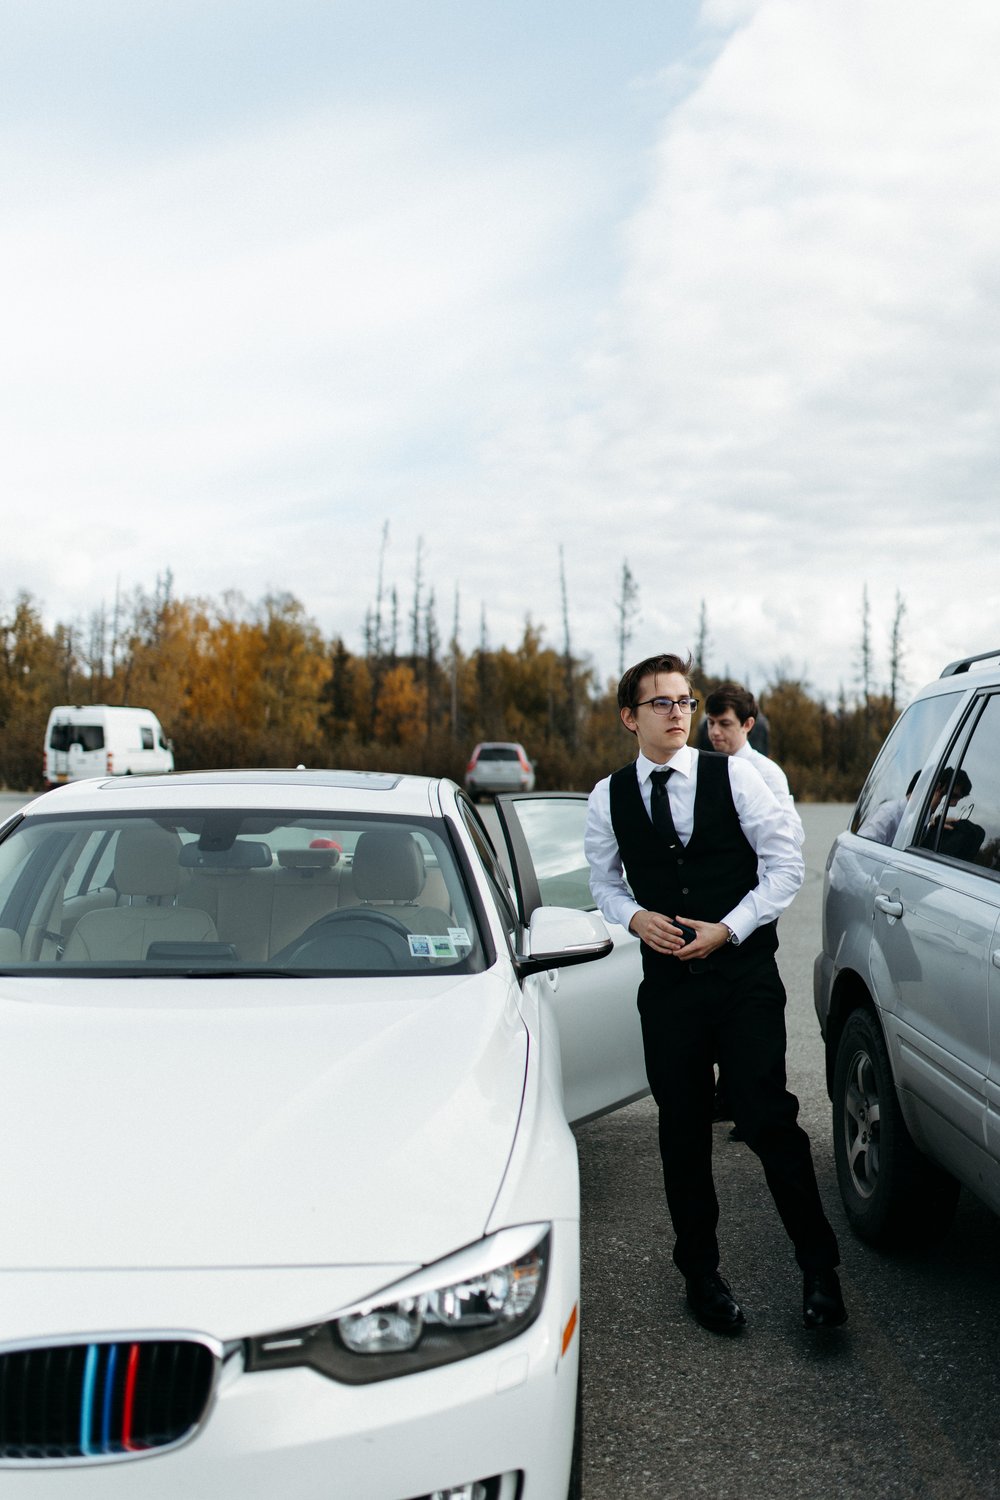 Hatcher Pass alaska autumn wedding photography